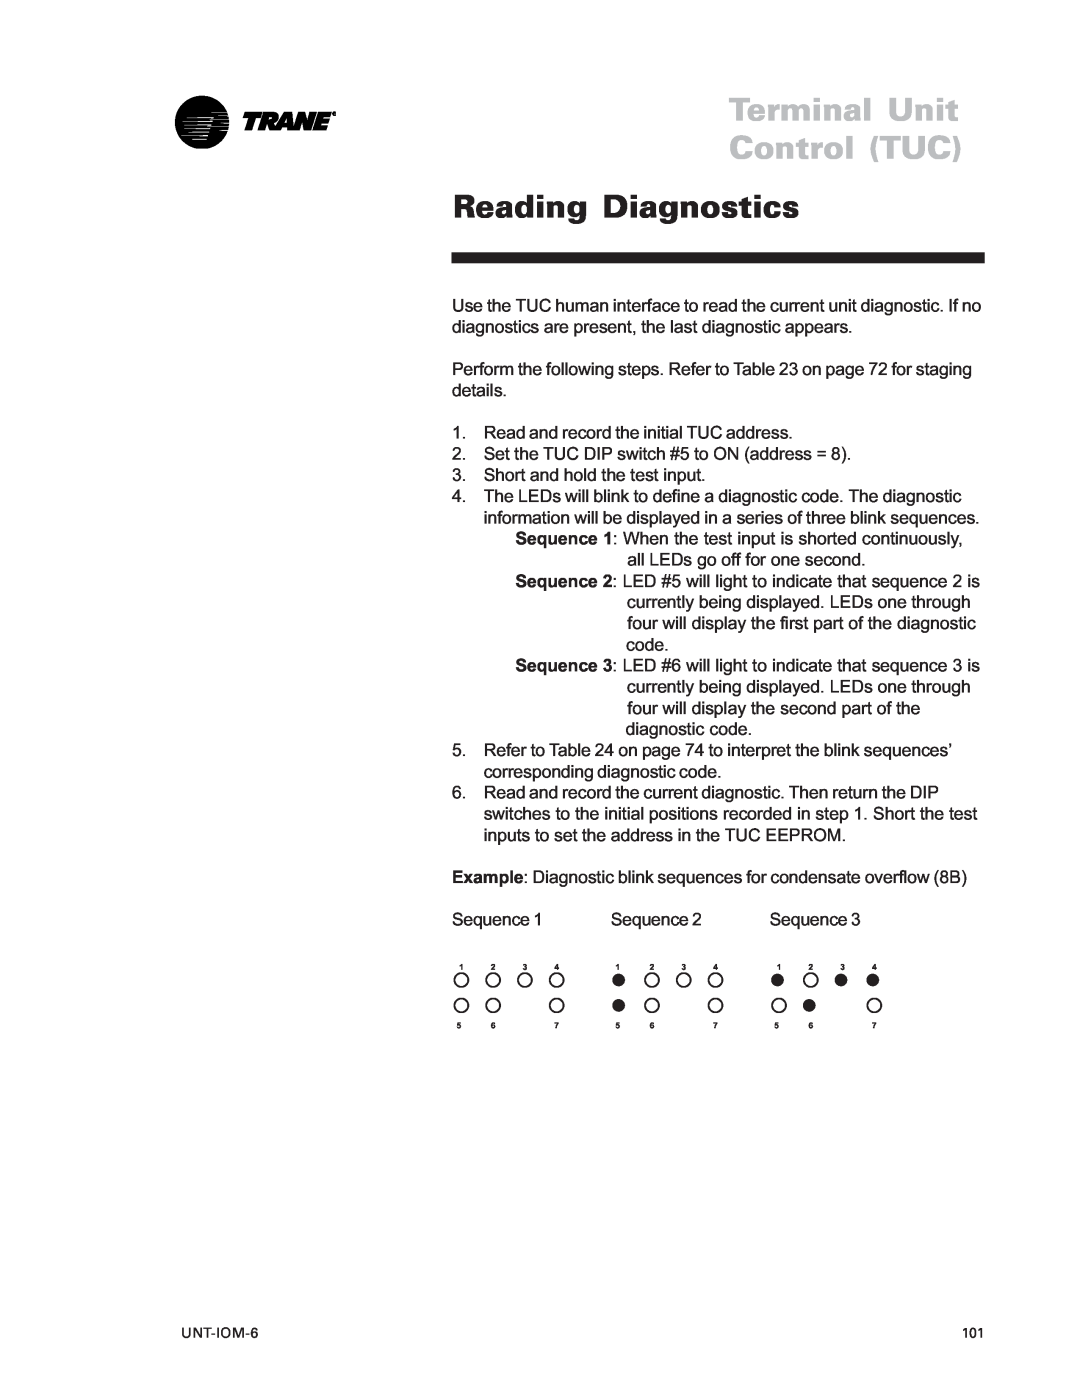 Trane LO manual Reading Diagnostics, ϒ ϒ ϒ ϒ λ ϒ ϒ ϒ λ ϒ λ λ, Terminal Unit Control TUC, Sequence 